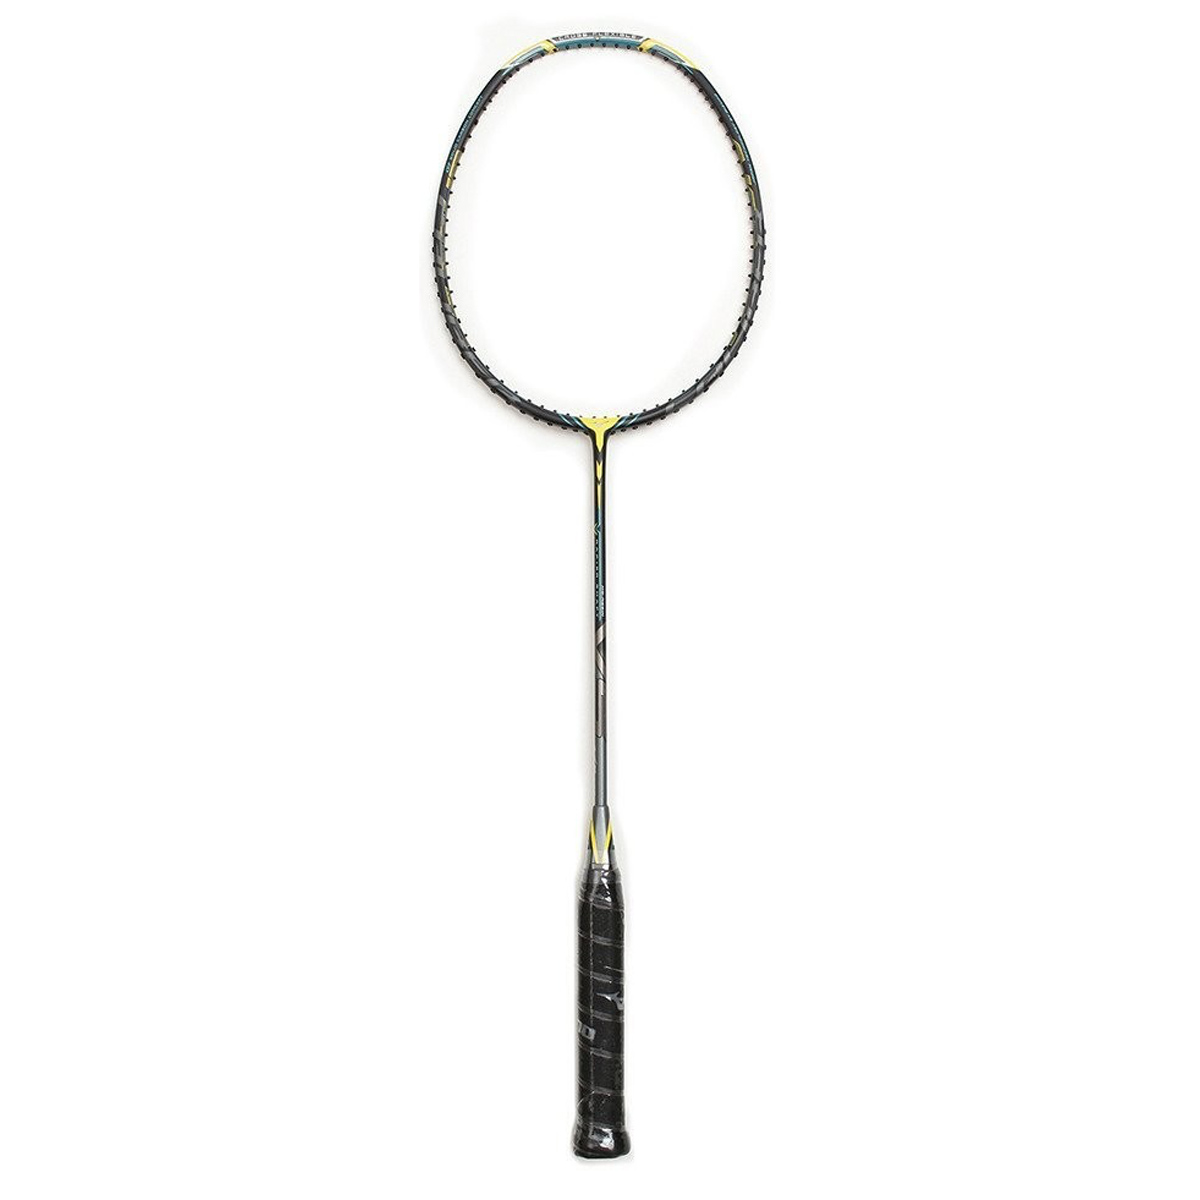 Details about   Mizuno CALIBER REG BLACK Badminton Racket Racquet String Shaft 4UG6 with Cover 